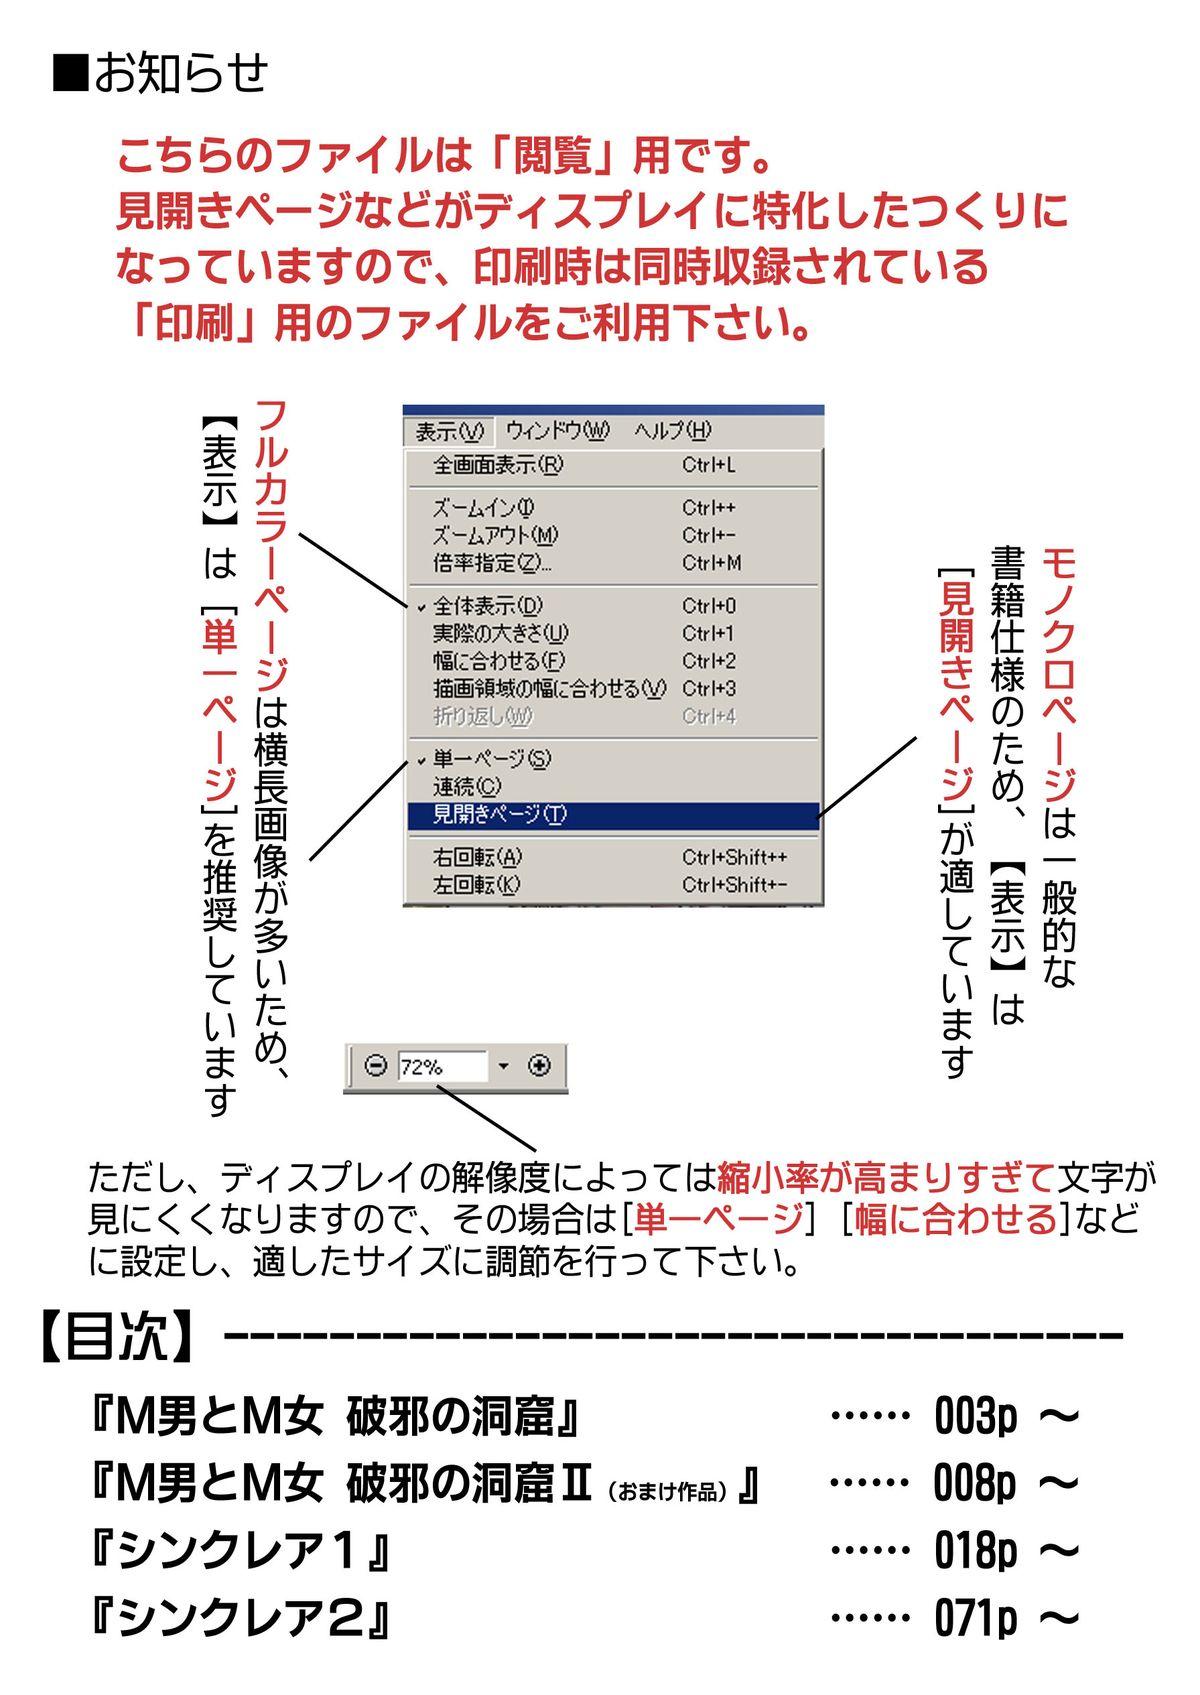 Sinclair - Download Tokubetsuban 2